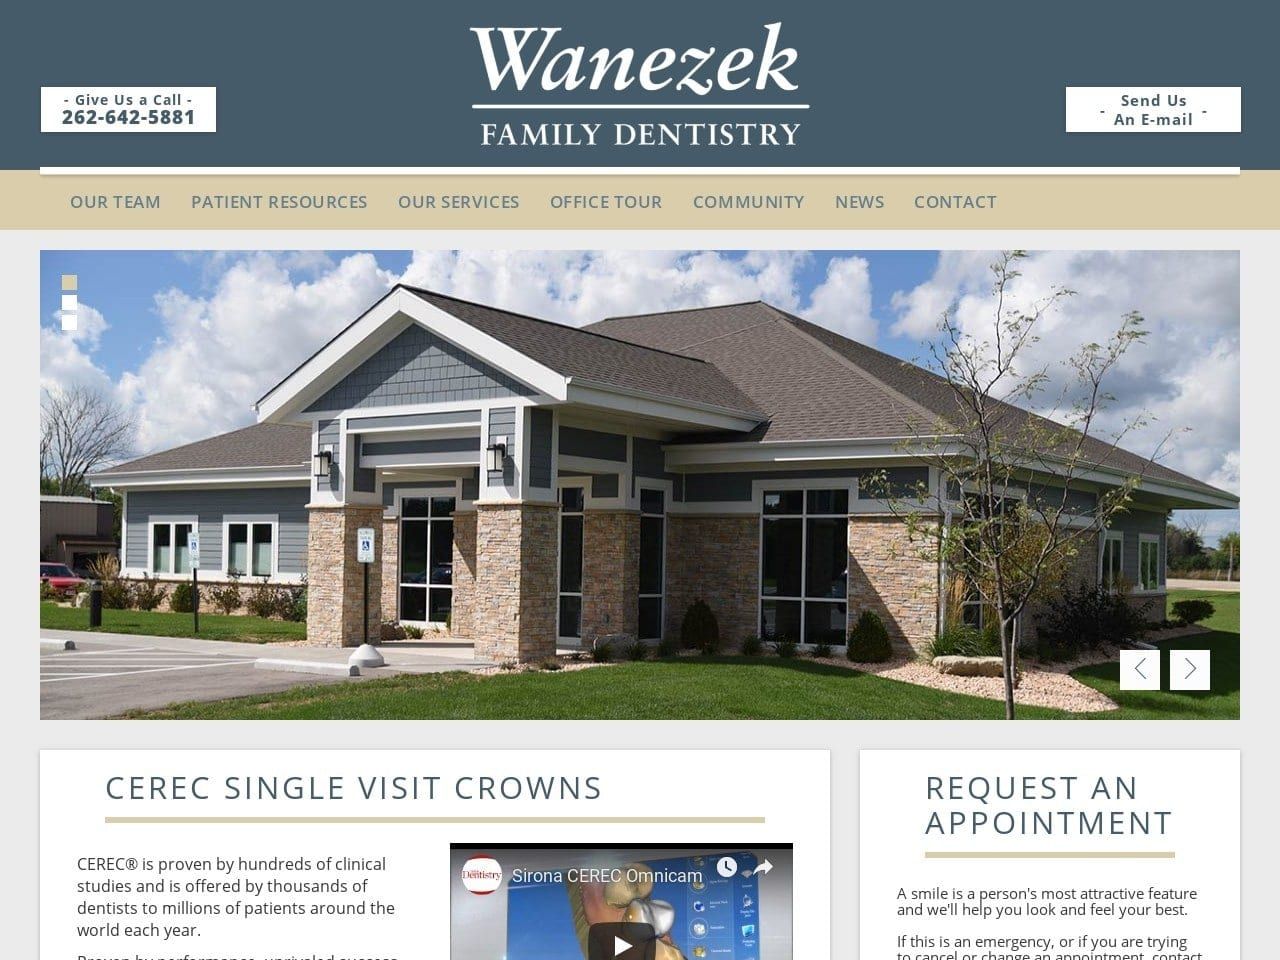 Wanezek Family Dentist Website Screenshot from wanezekfamilydentistry.com